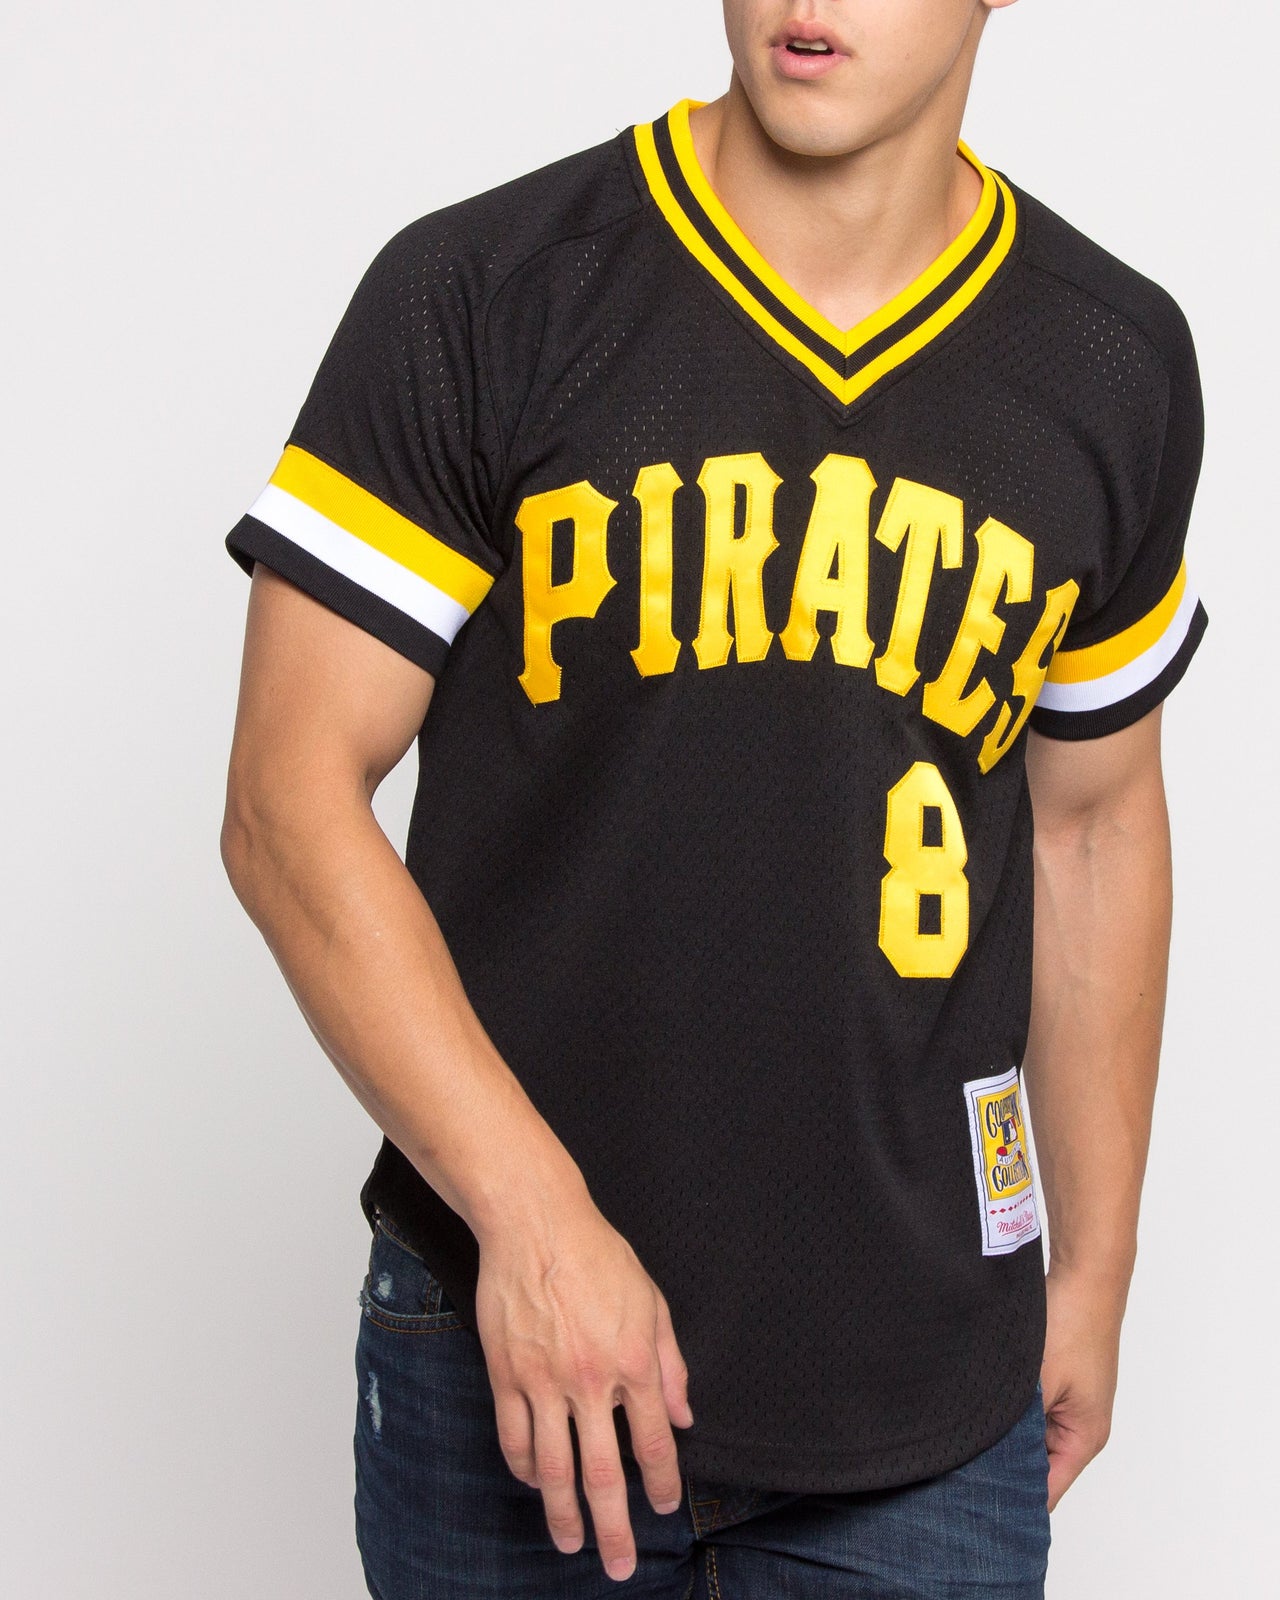 pirates batting jersey